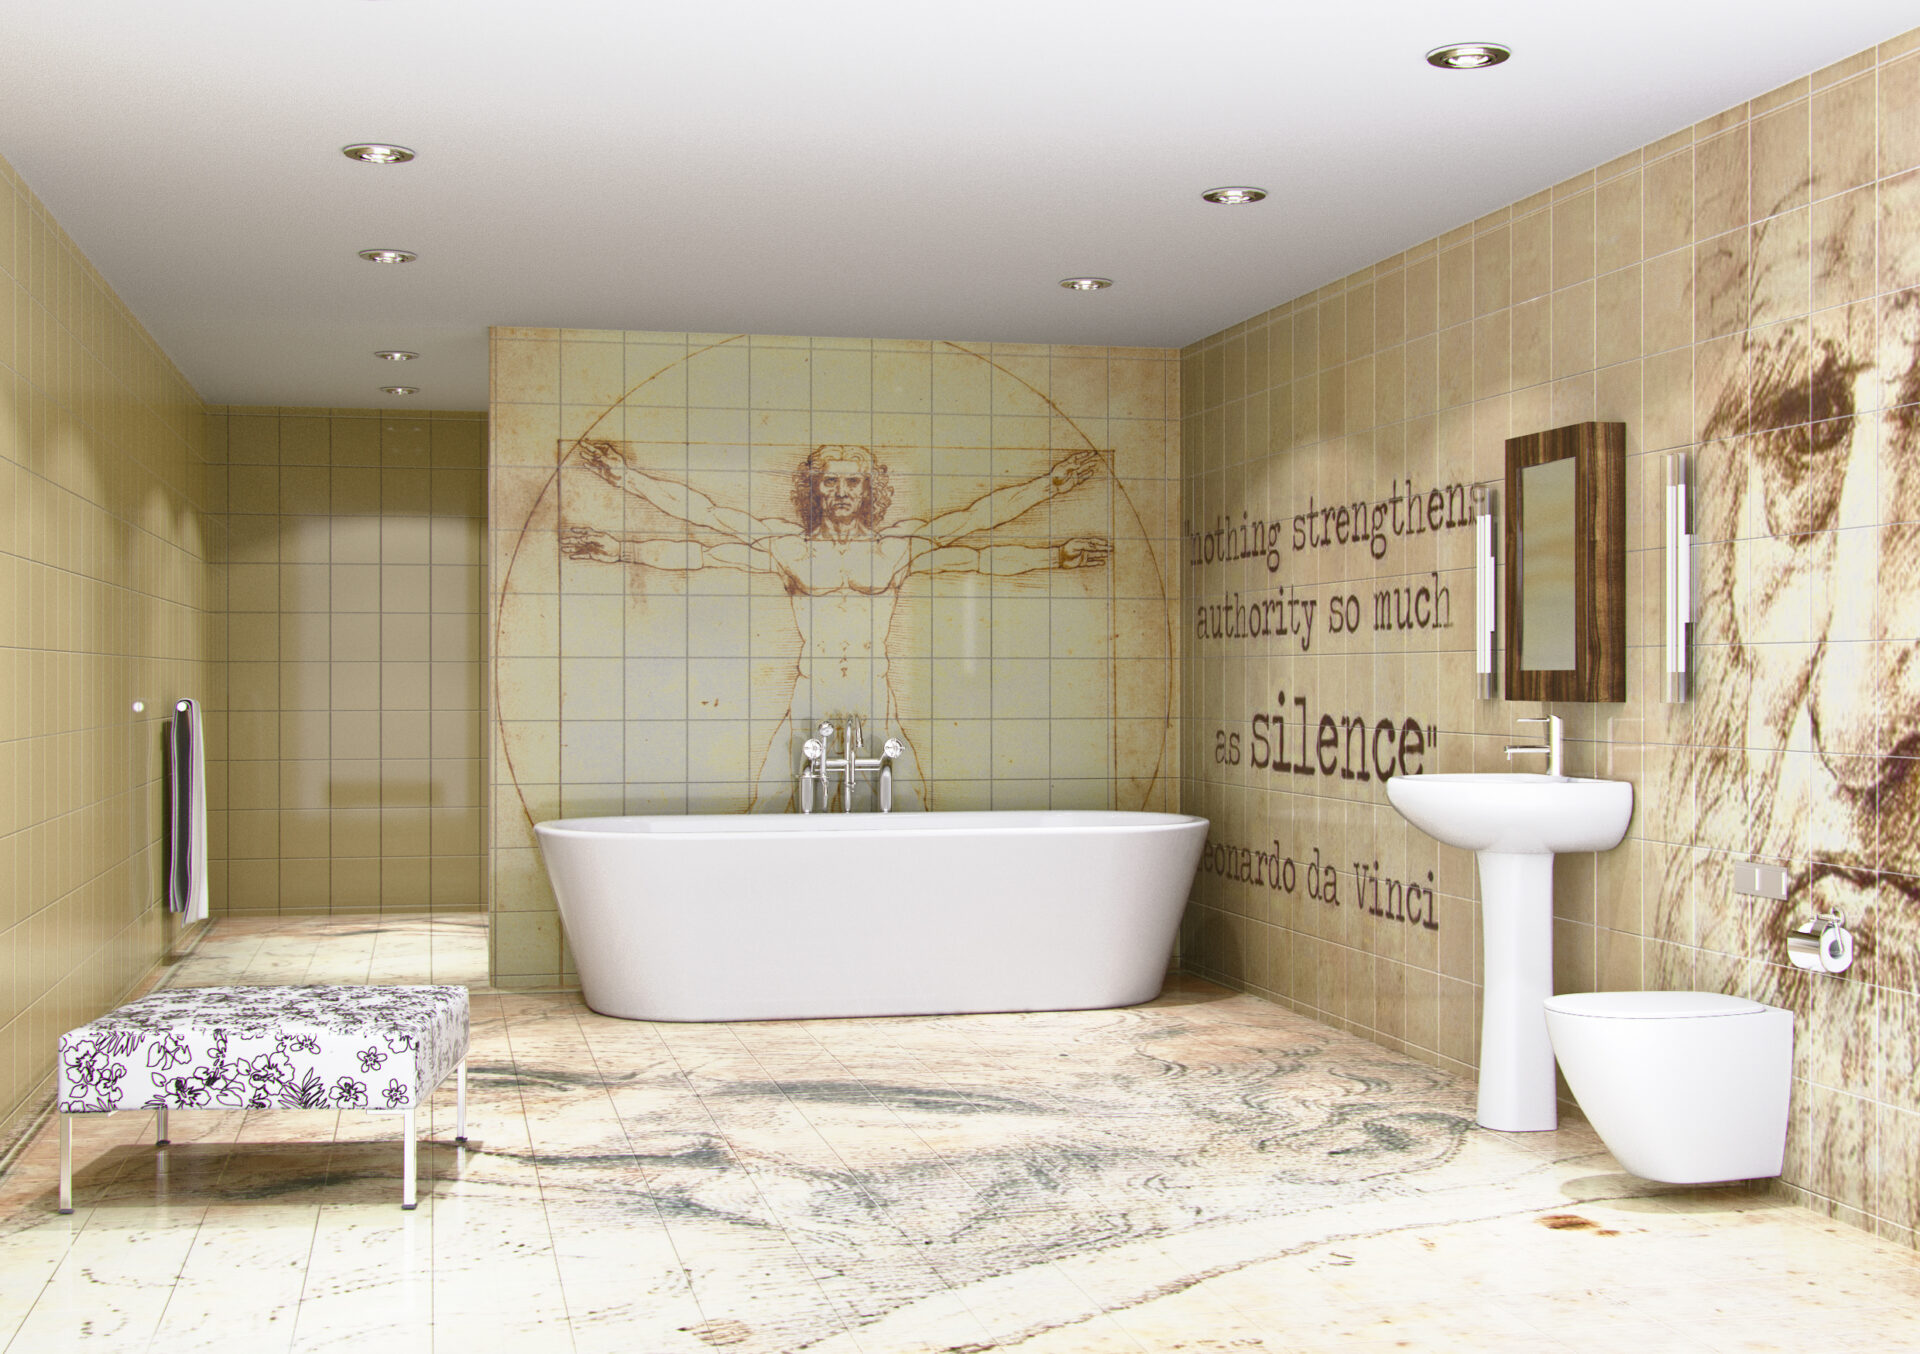 Davinci Commercial Bathroom - Tile Mural Creative Arts